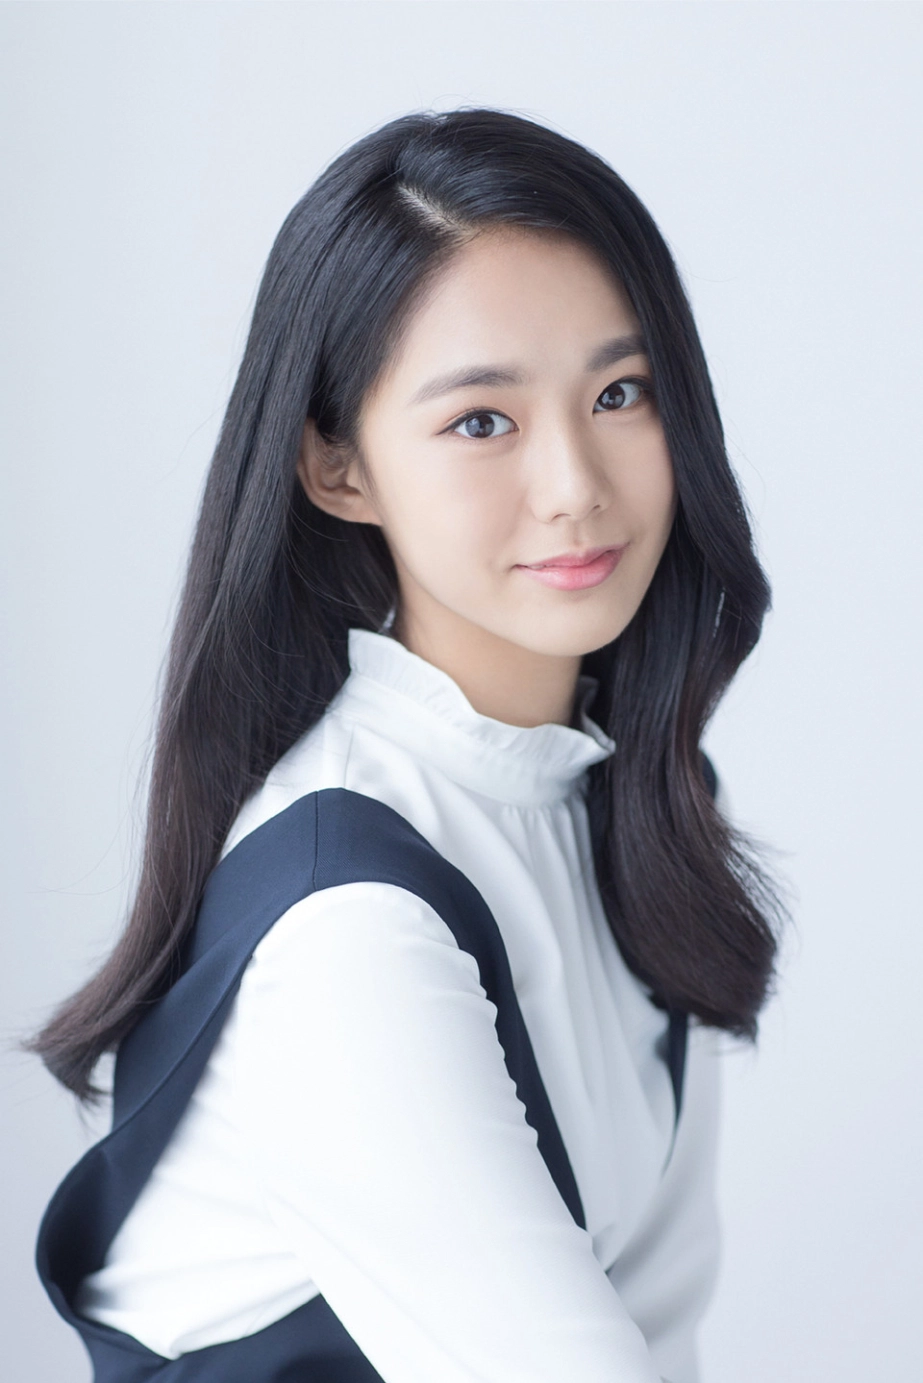 Lee seo yeon nữ phụ nổi tiếng ở phim doctor cha